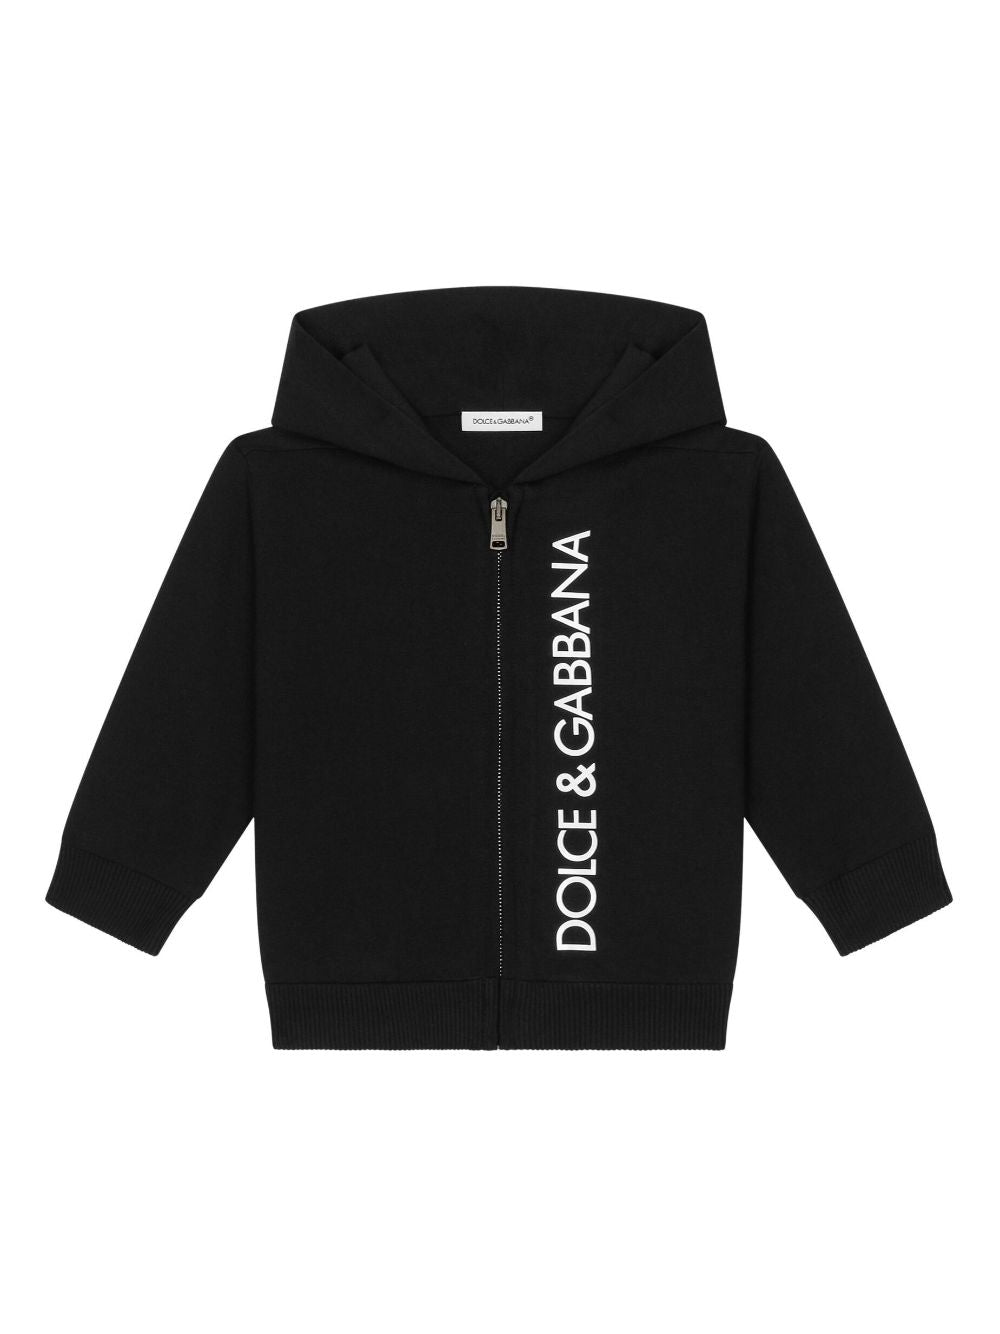 Black sweatshirt for newborns with logo